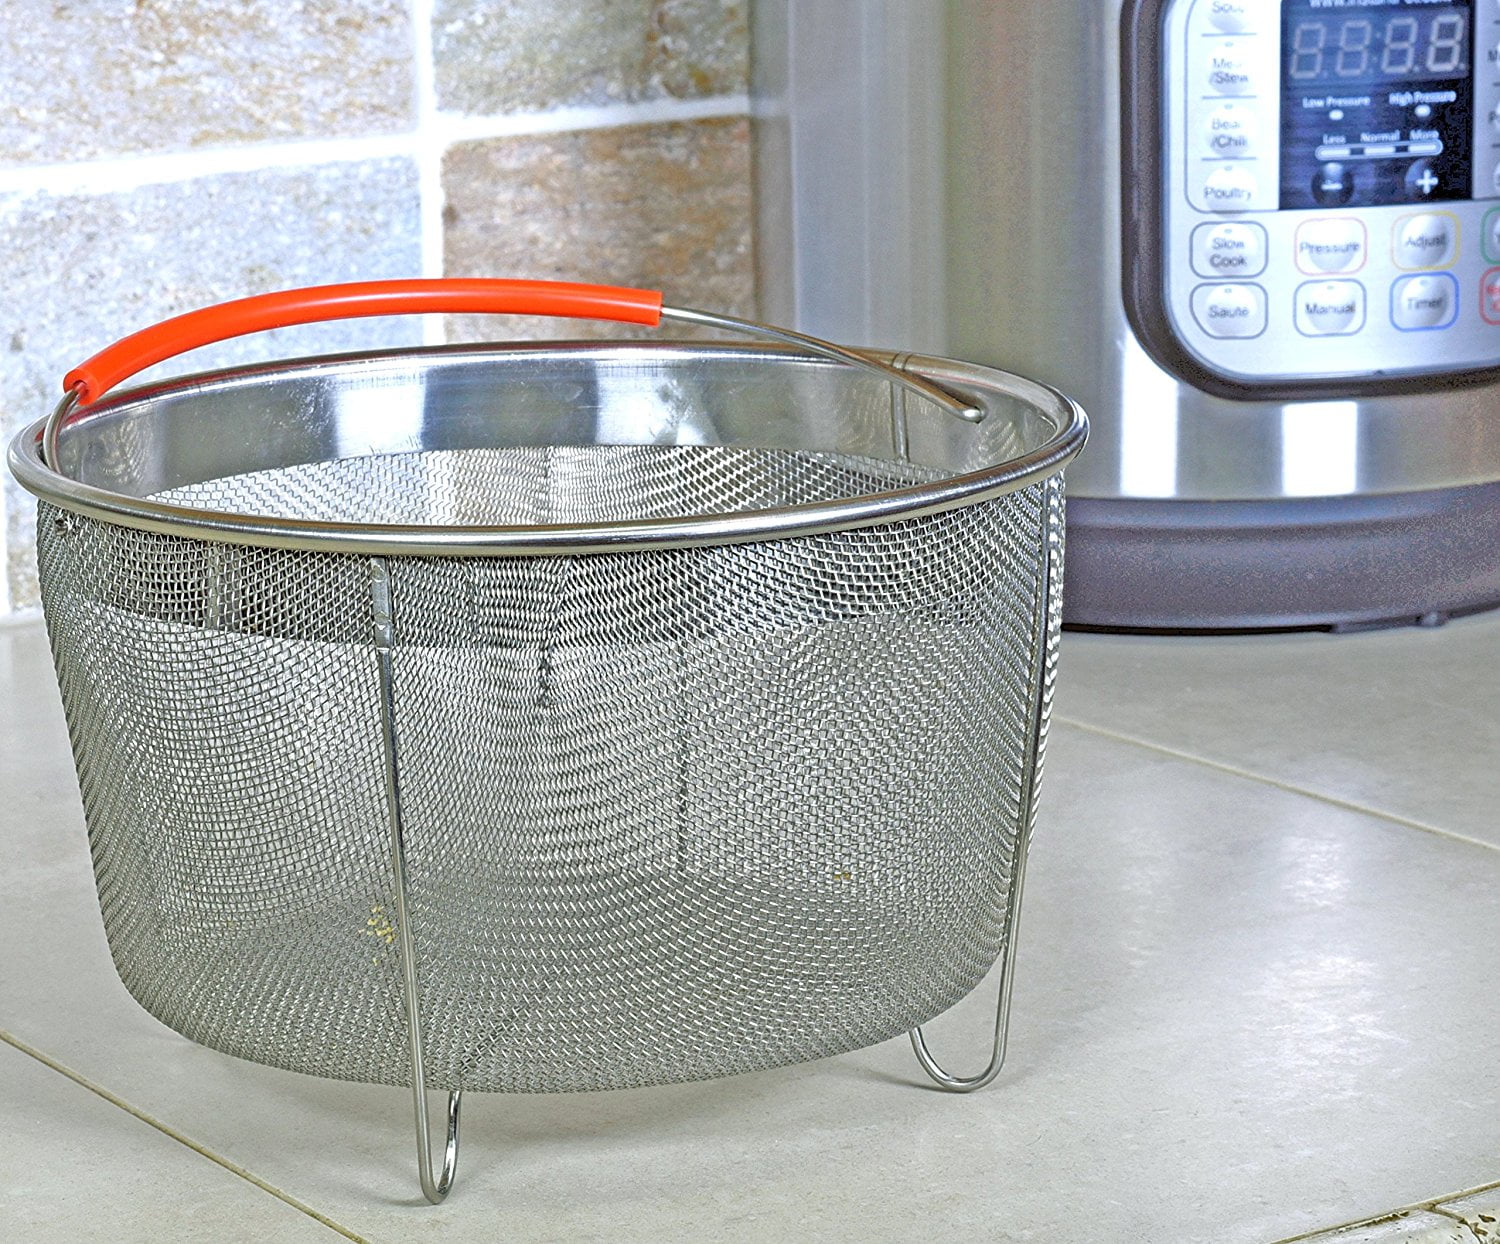 The Original Salbree 3qt Instant Pot Steamer Basket Accessories